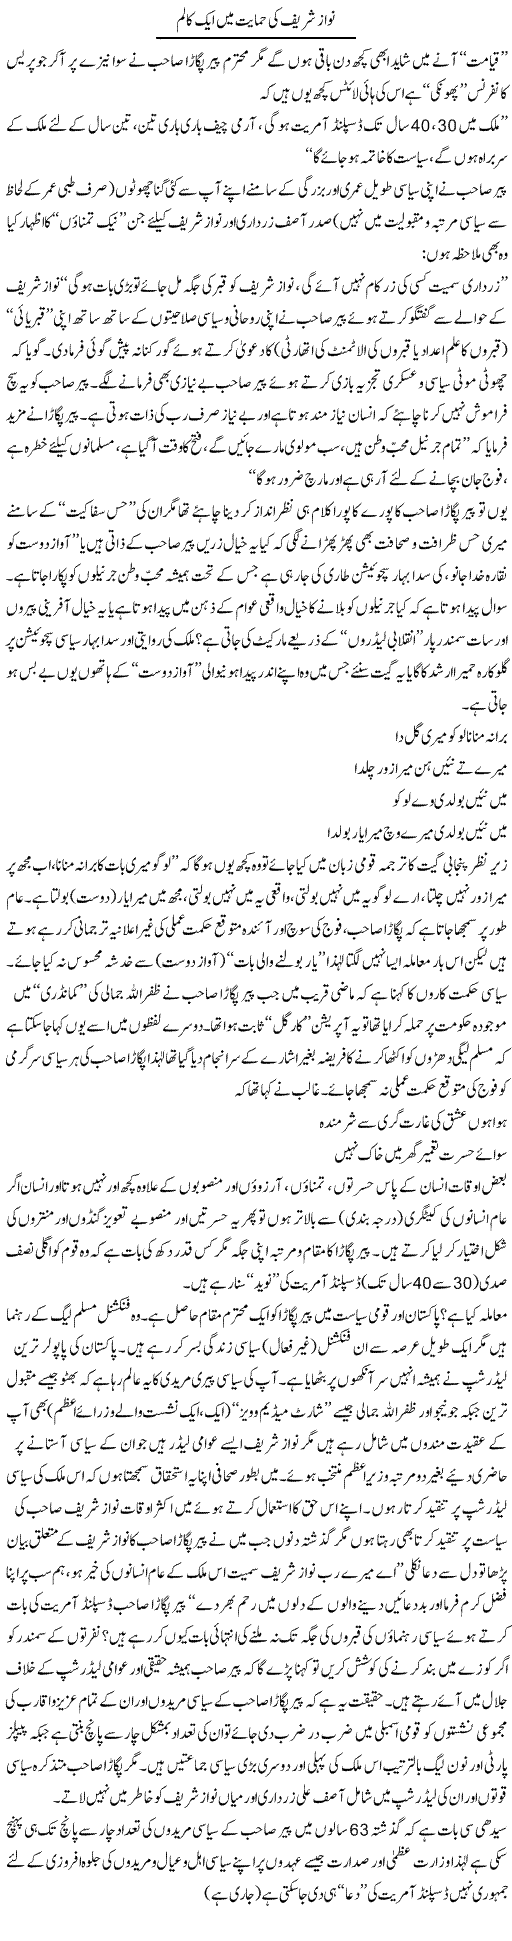 Support of Nawaz Sharif Express Column Tahir Sarwar 6 March 2011